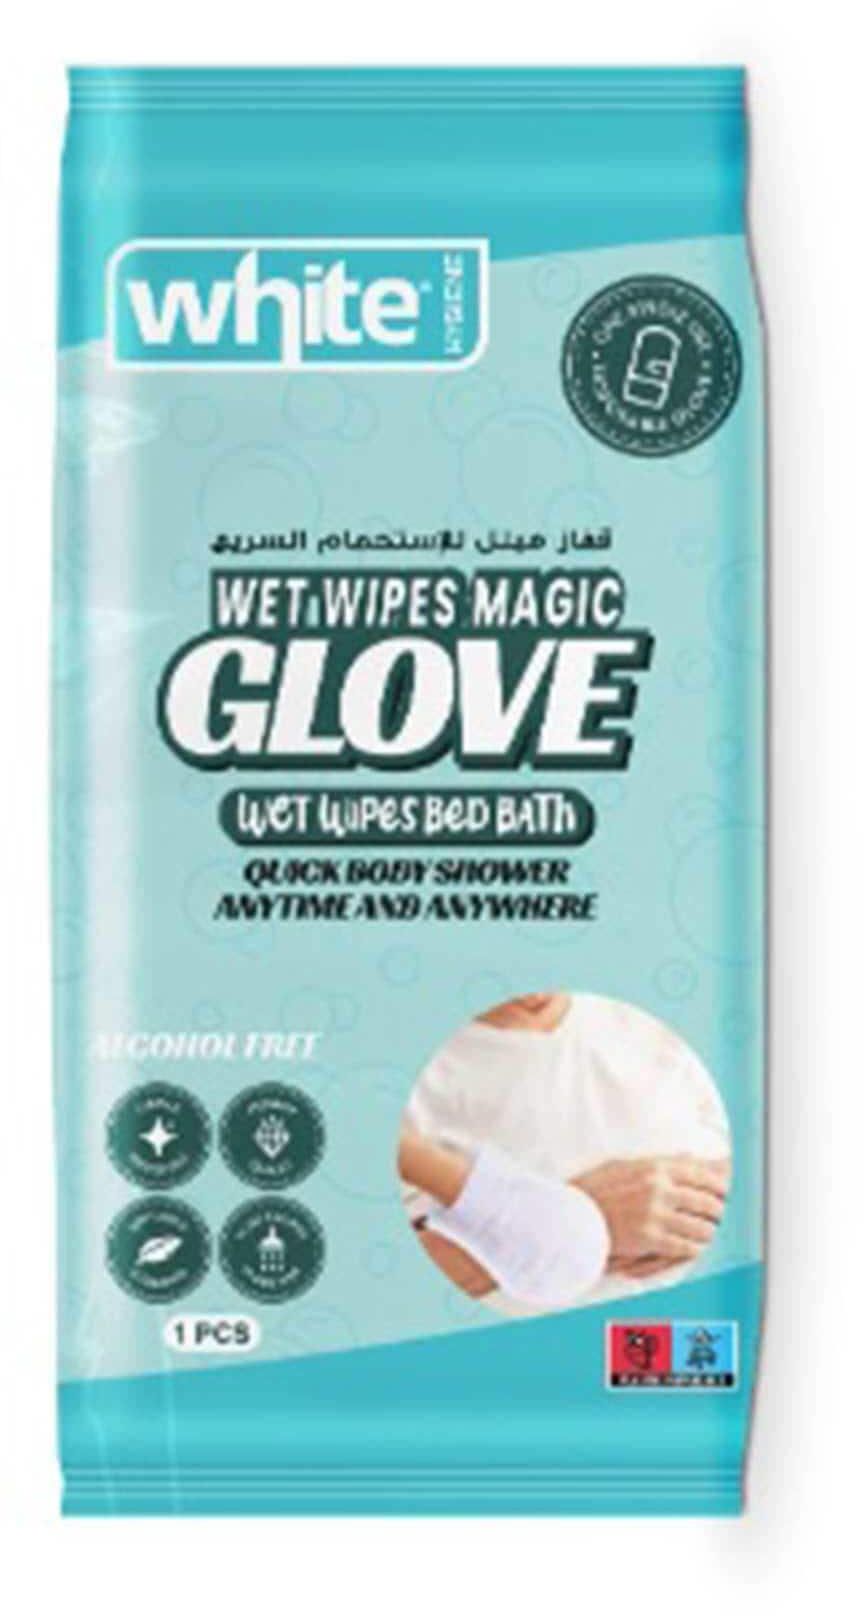 White Wipes Glove for Quick Bath - 1 Piece